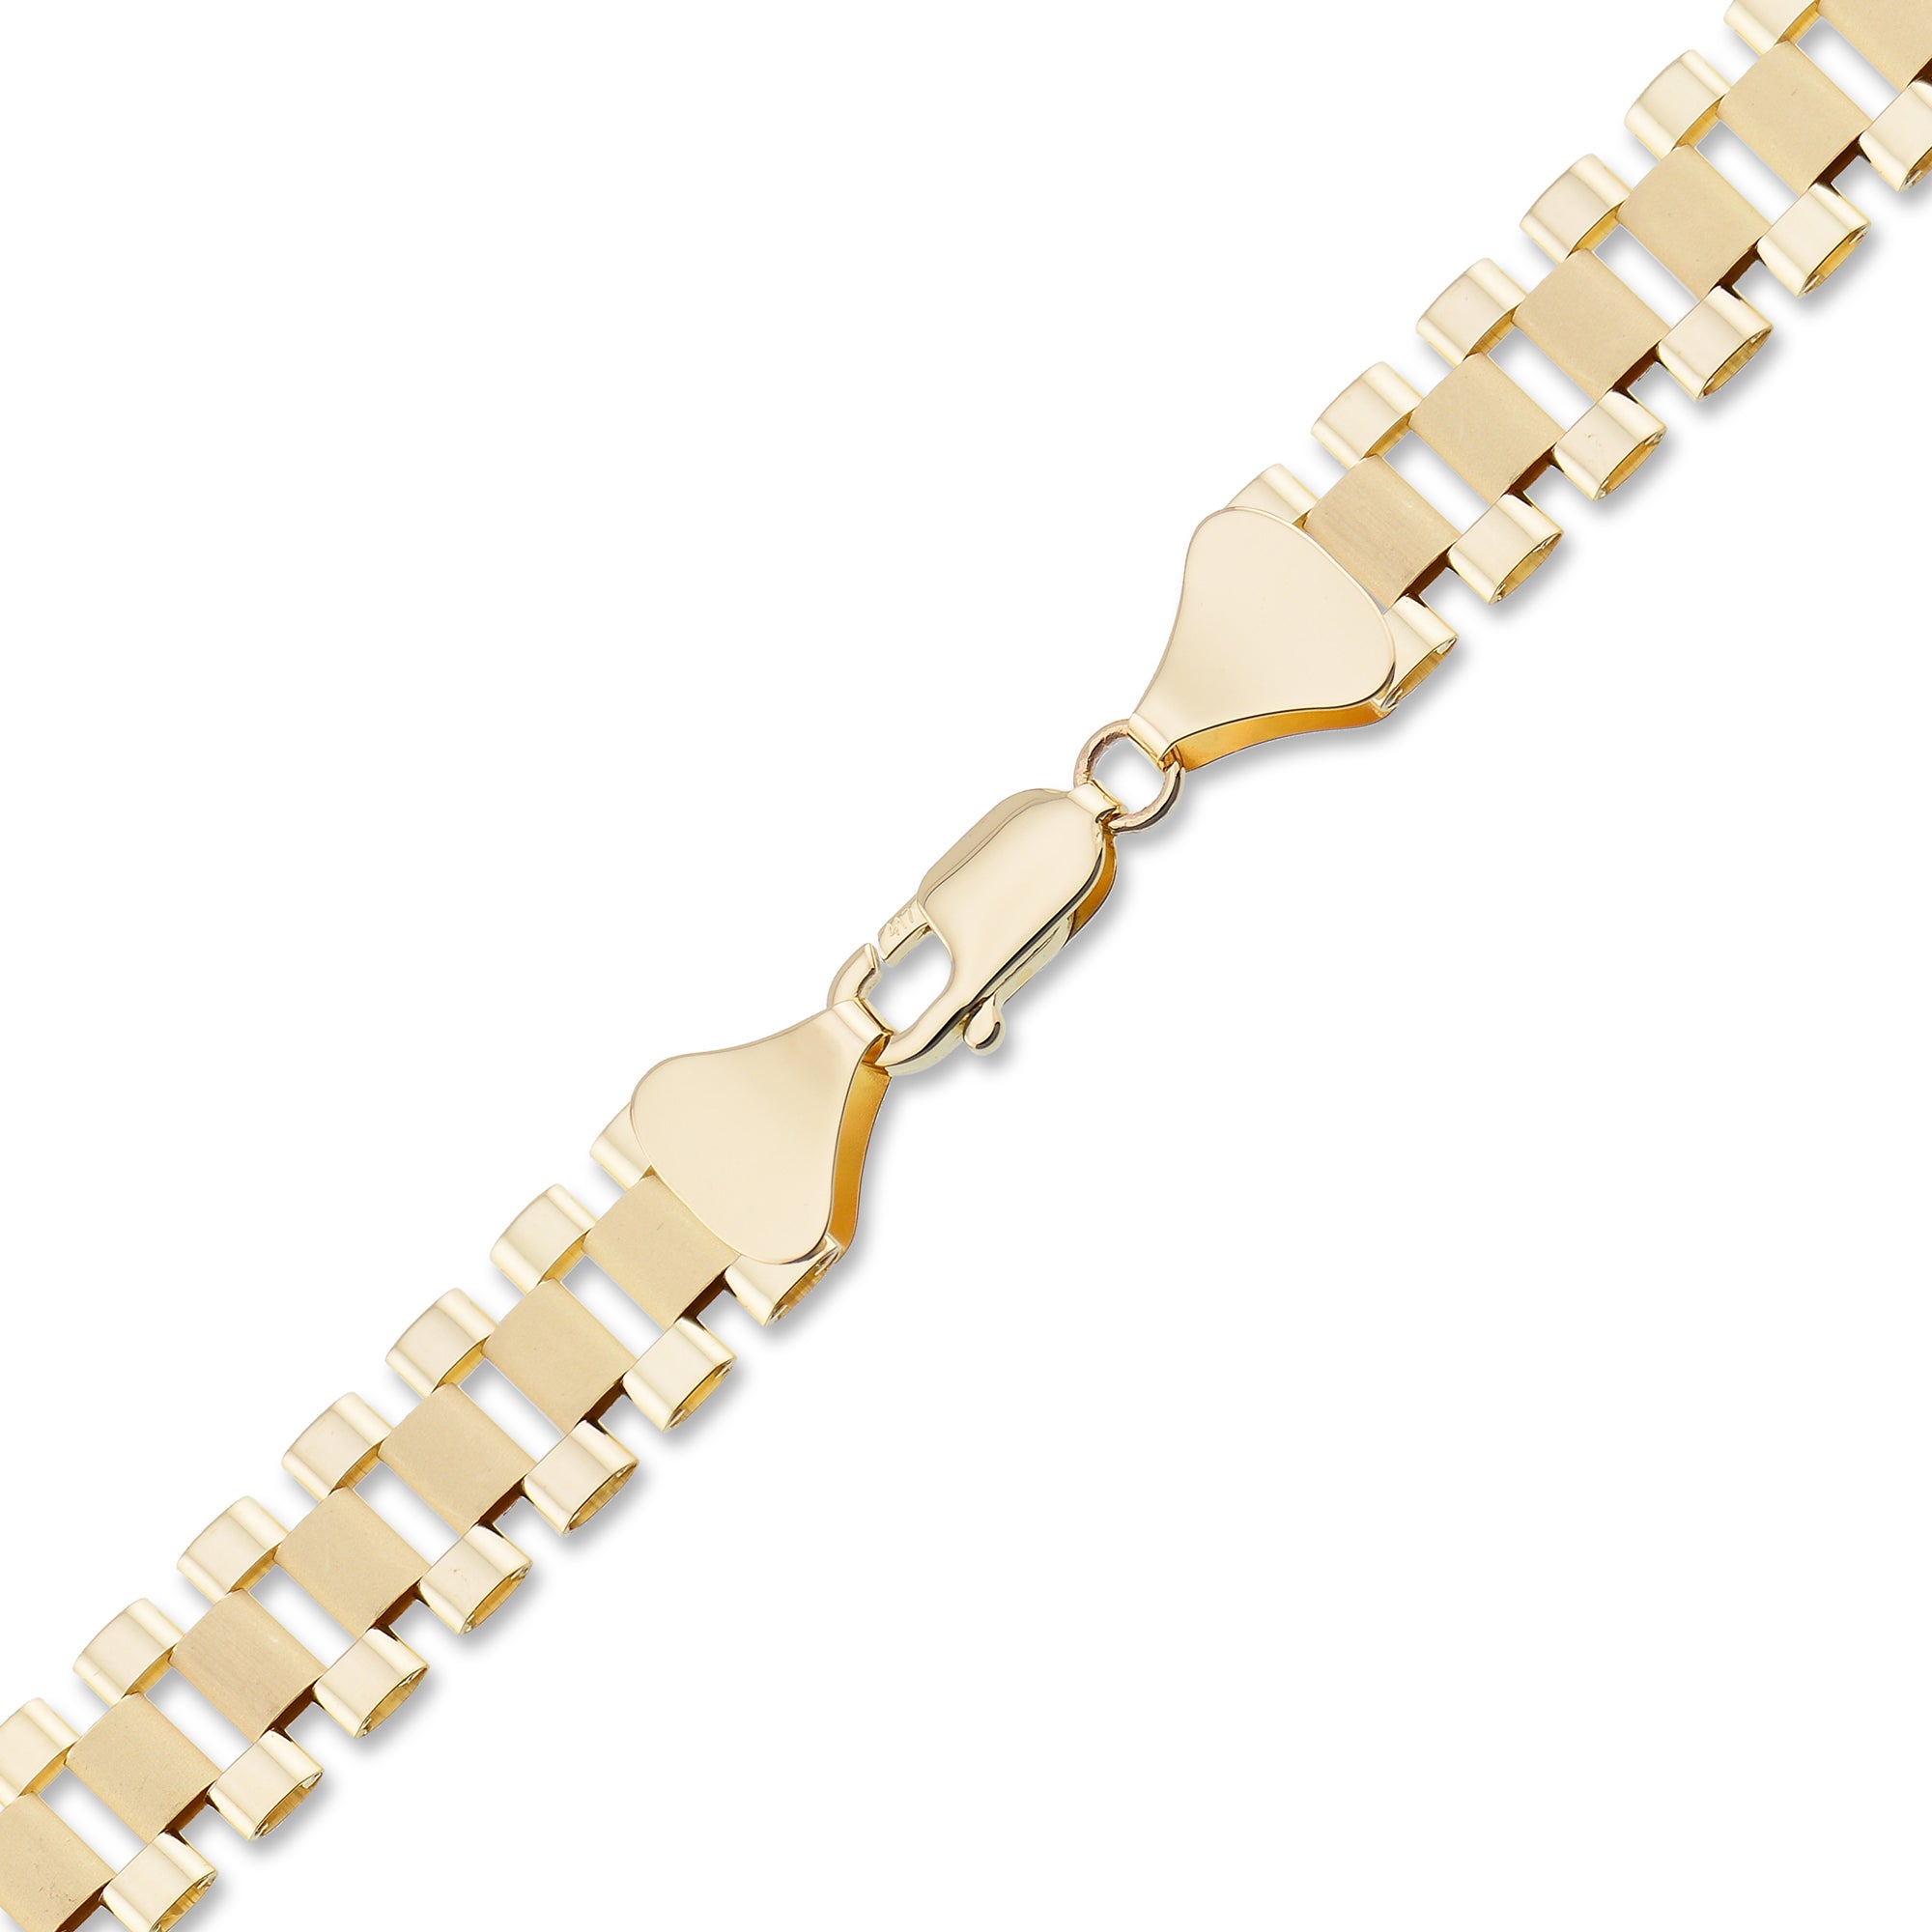 Rolex Bracelet NEW GENUINE STAINLESS STEEL OYSTER BANDS REF 78240 78240  Ladies Oyster Bracelet Never Worn